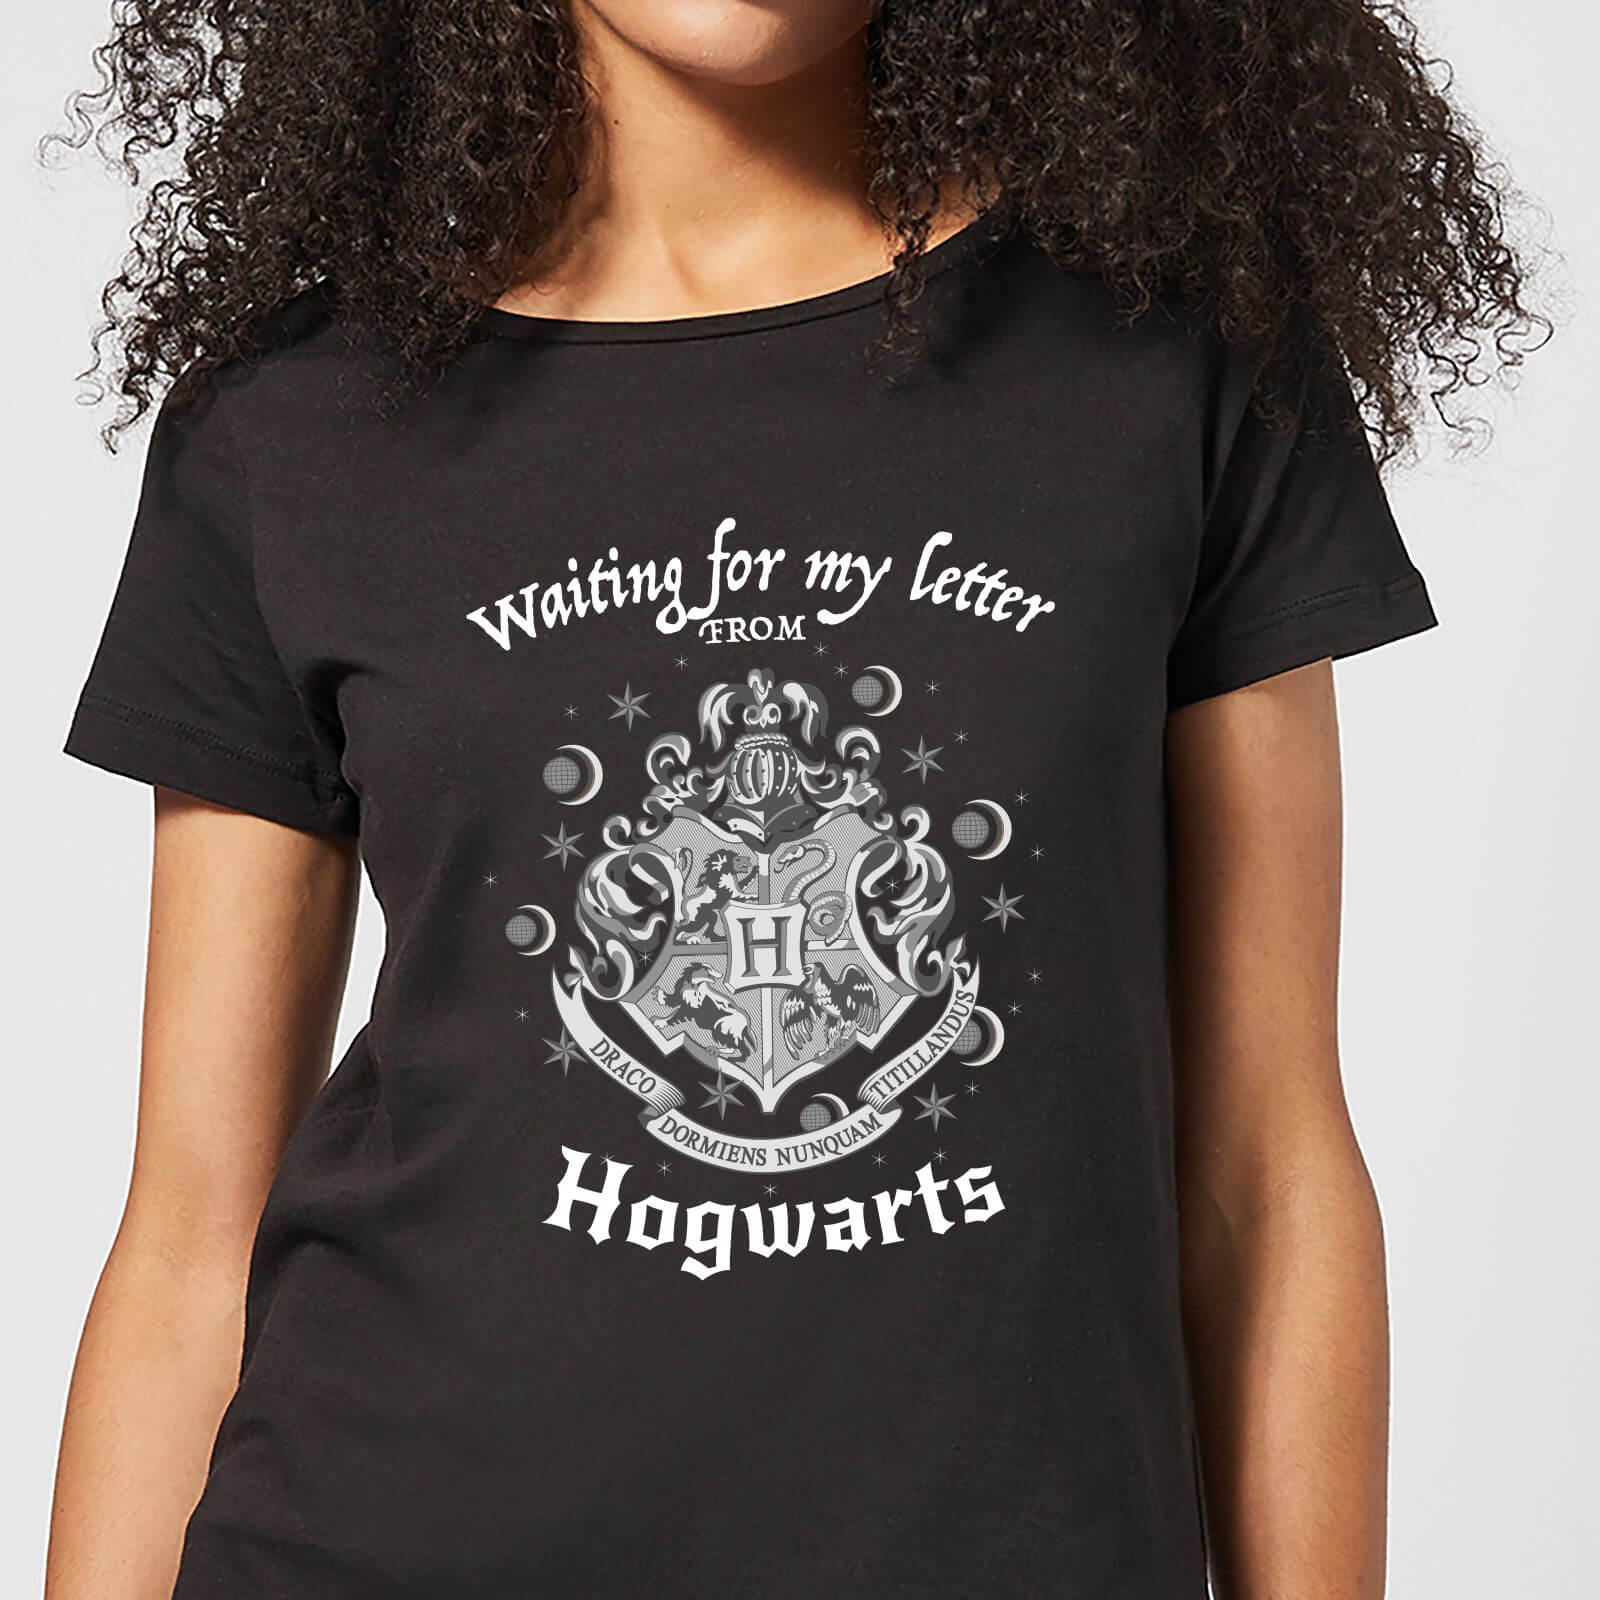 Harry Potter Waiting For My Letter From Hogwarts Women's T-Shirt - Black - 4XL - Black